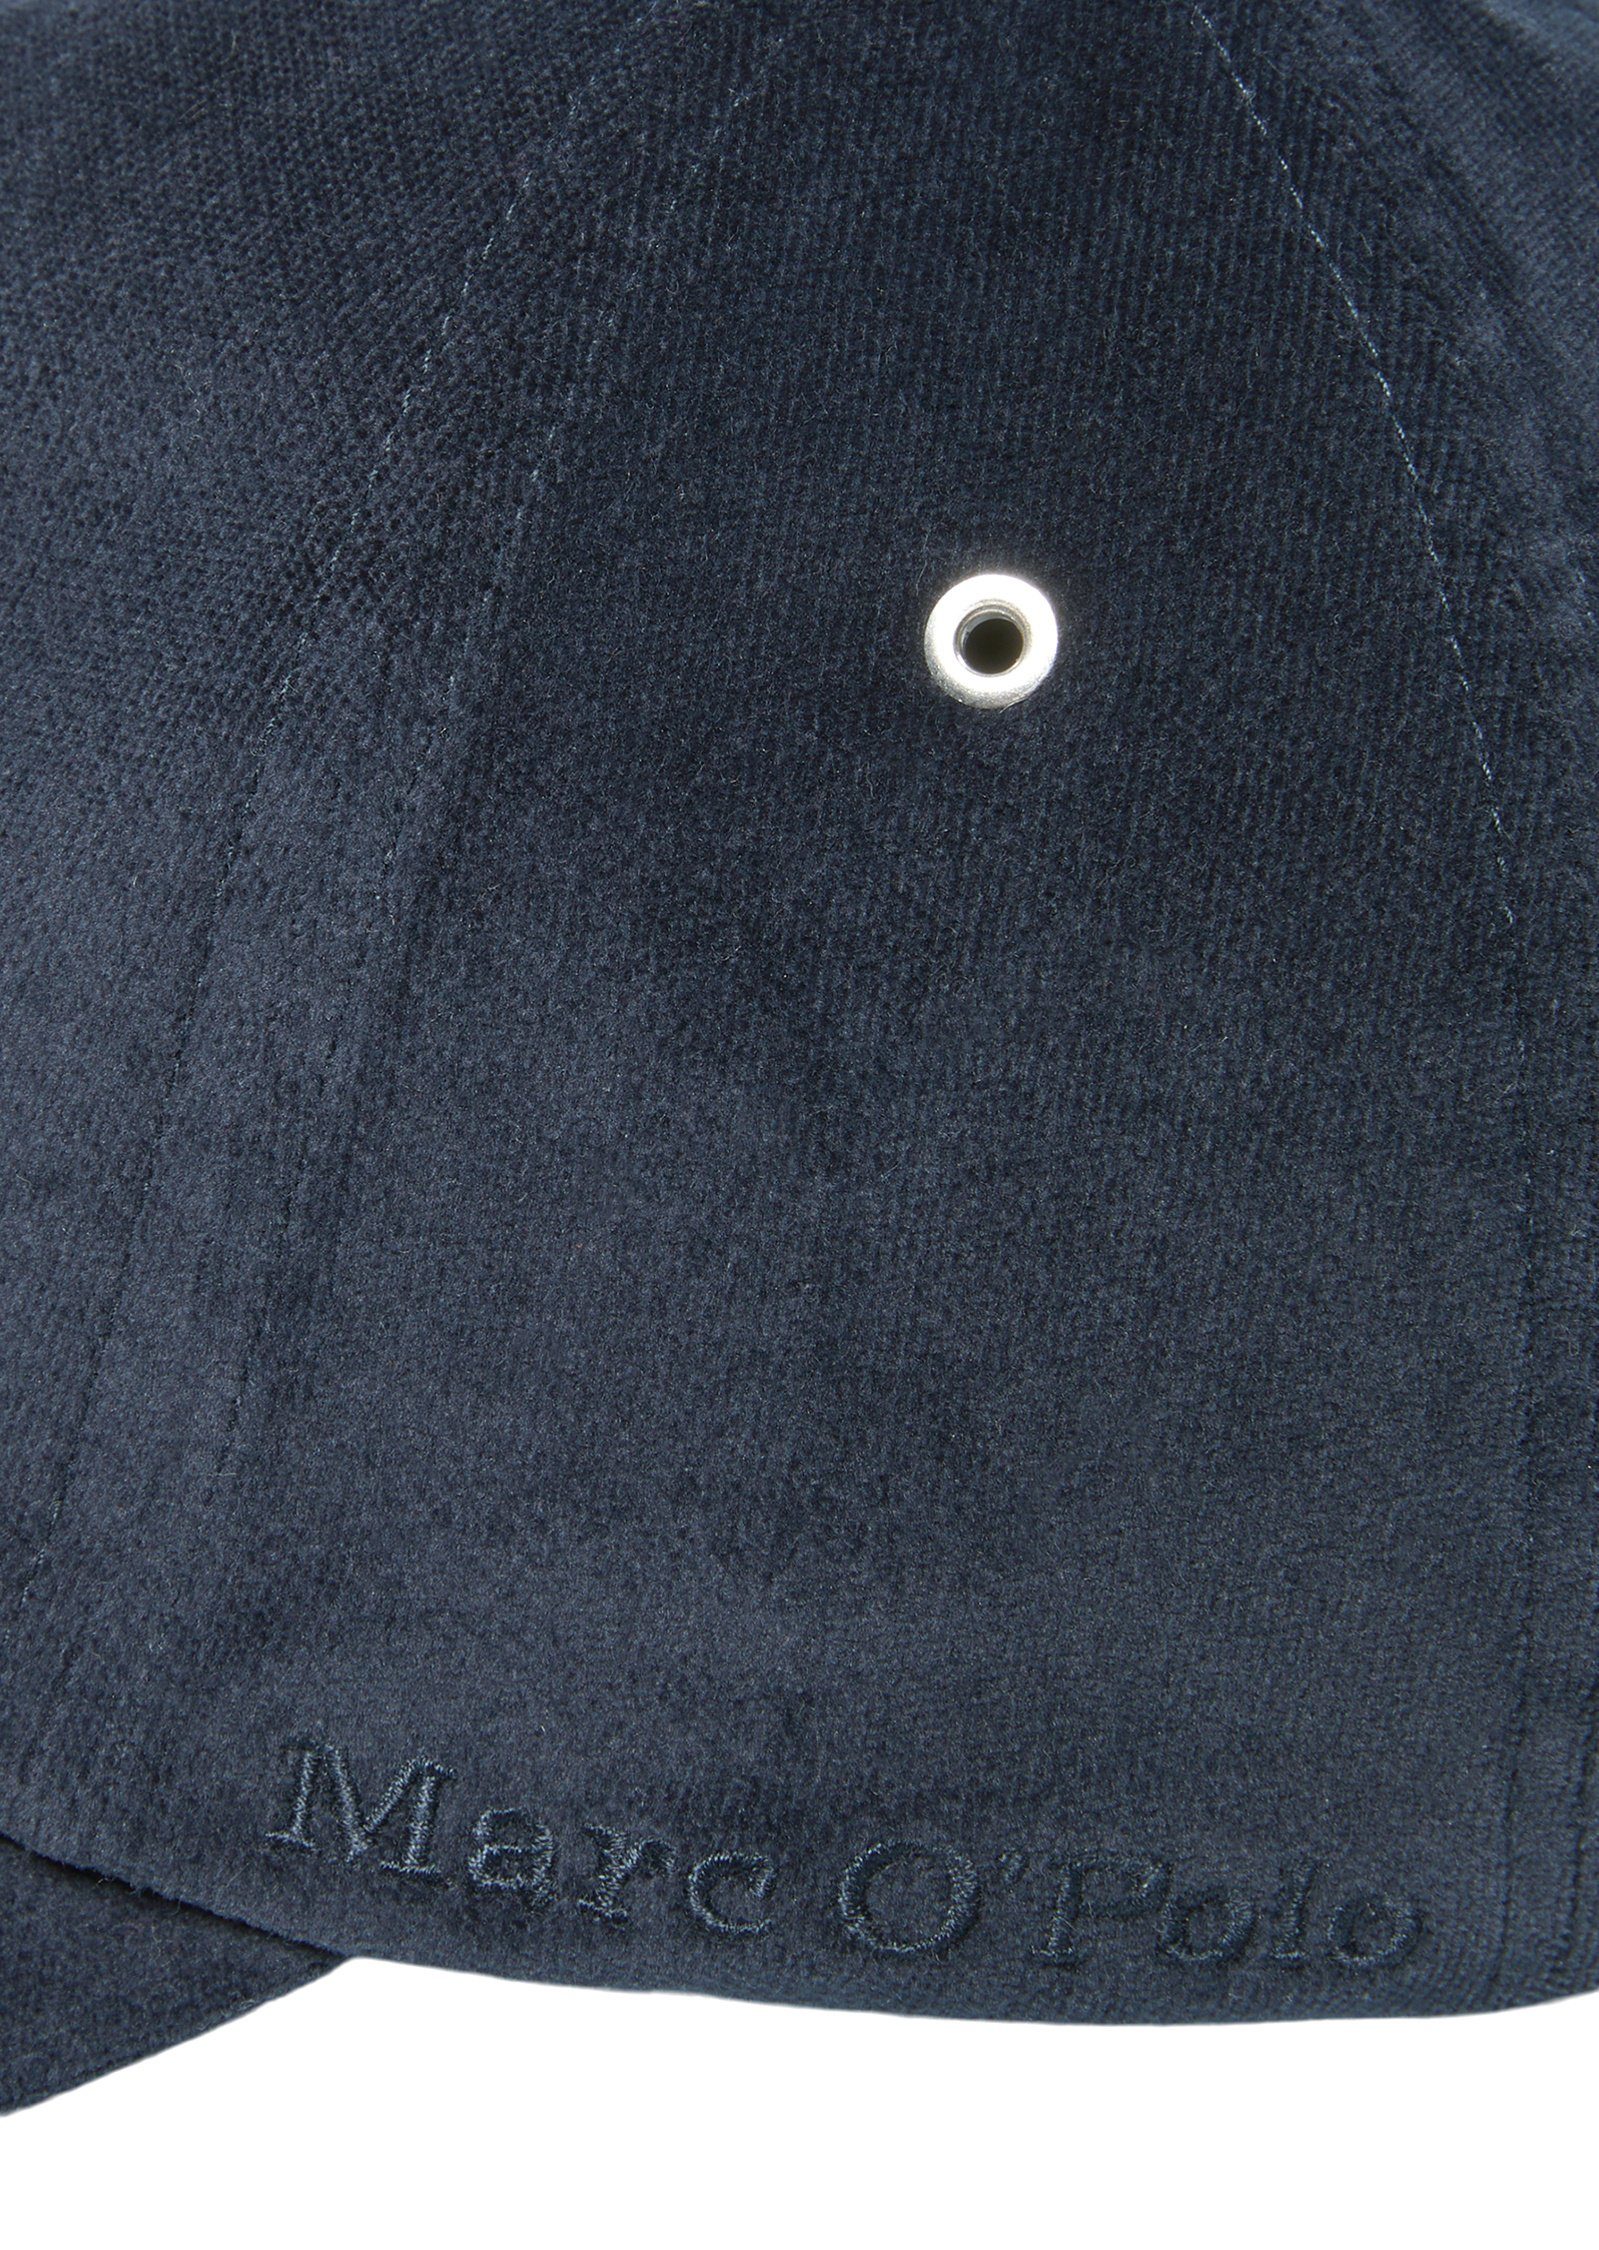 Marc O'Polo Baseball Cap aus blau Organic-Cotton-Lyocell-Mix